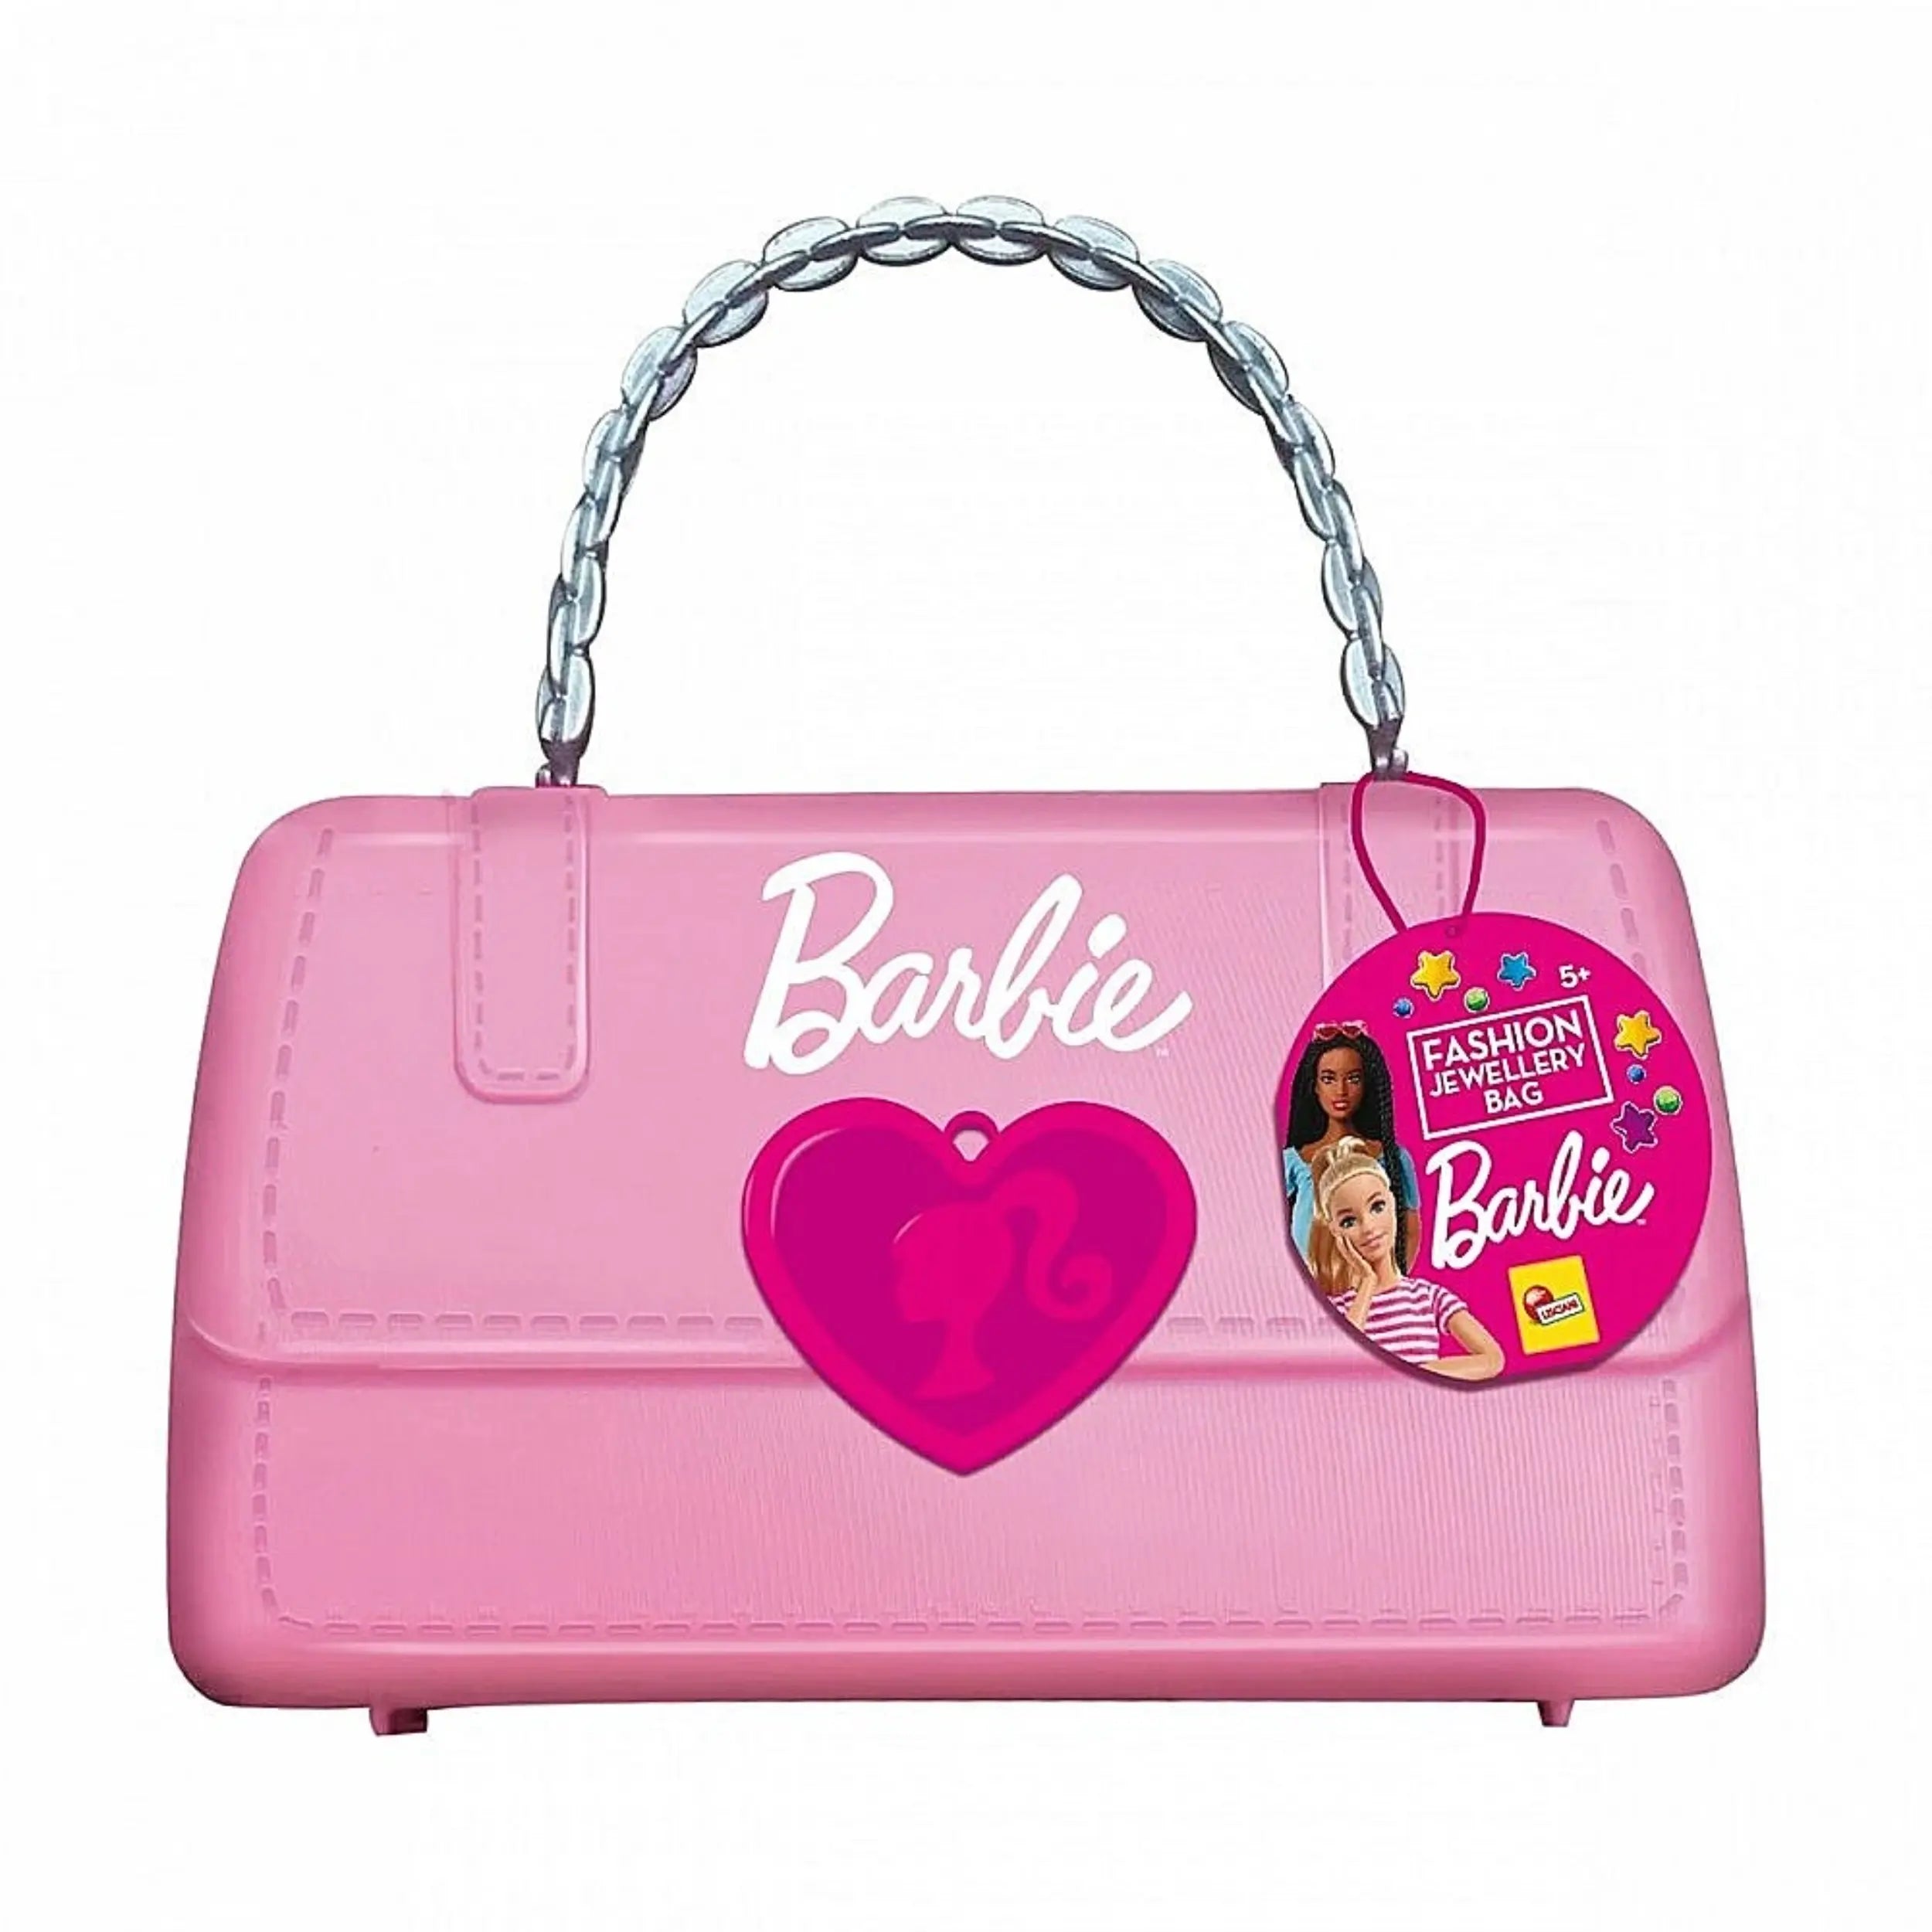 Lisciani - Lisciani Barbie Fashion Jewellery Bag